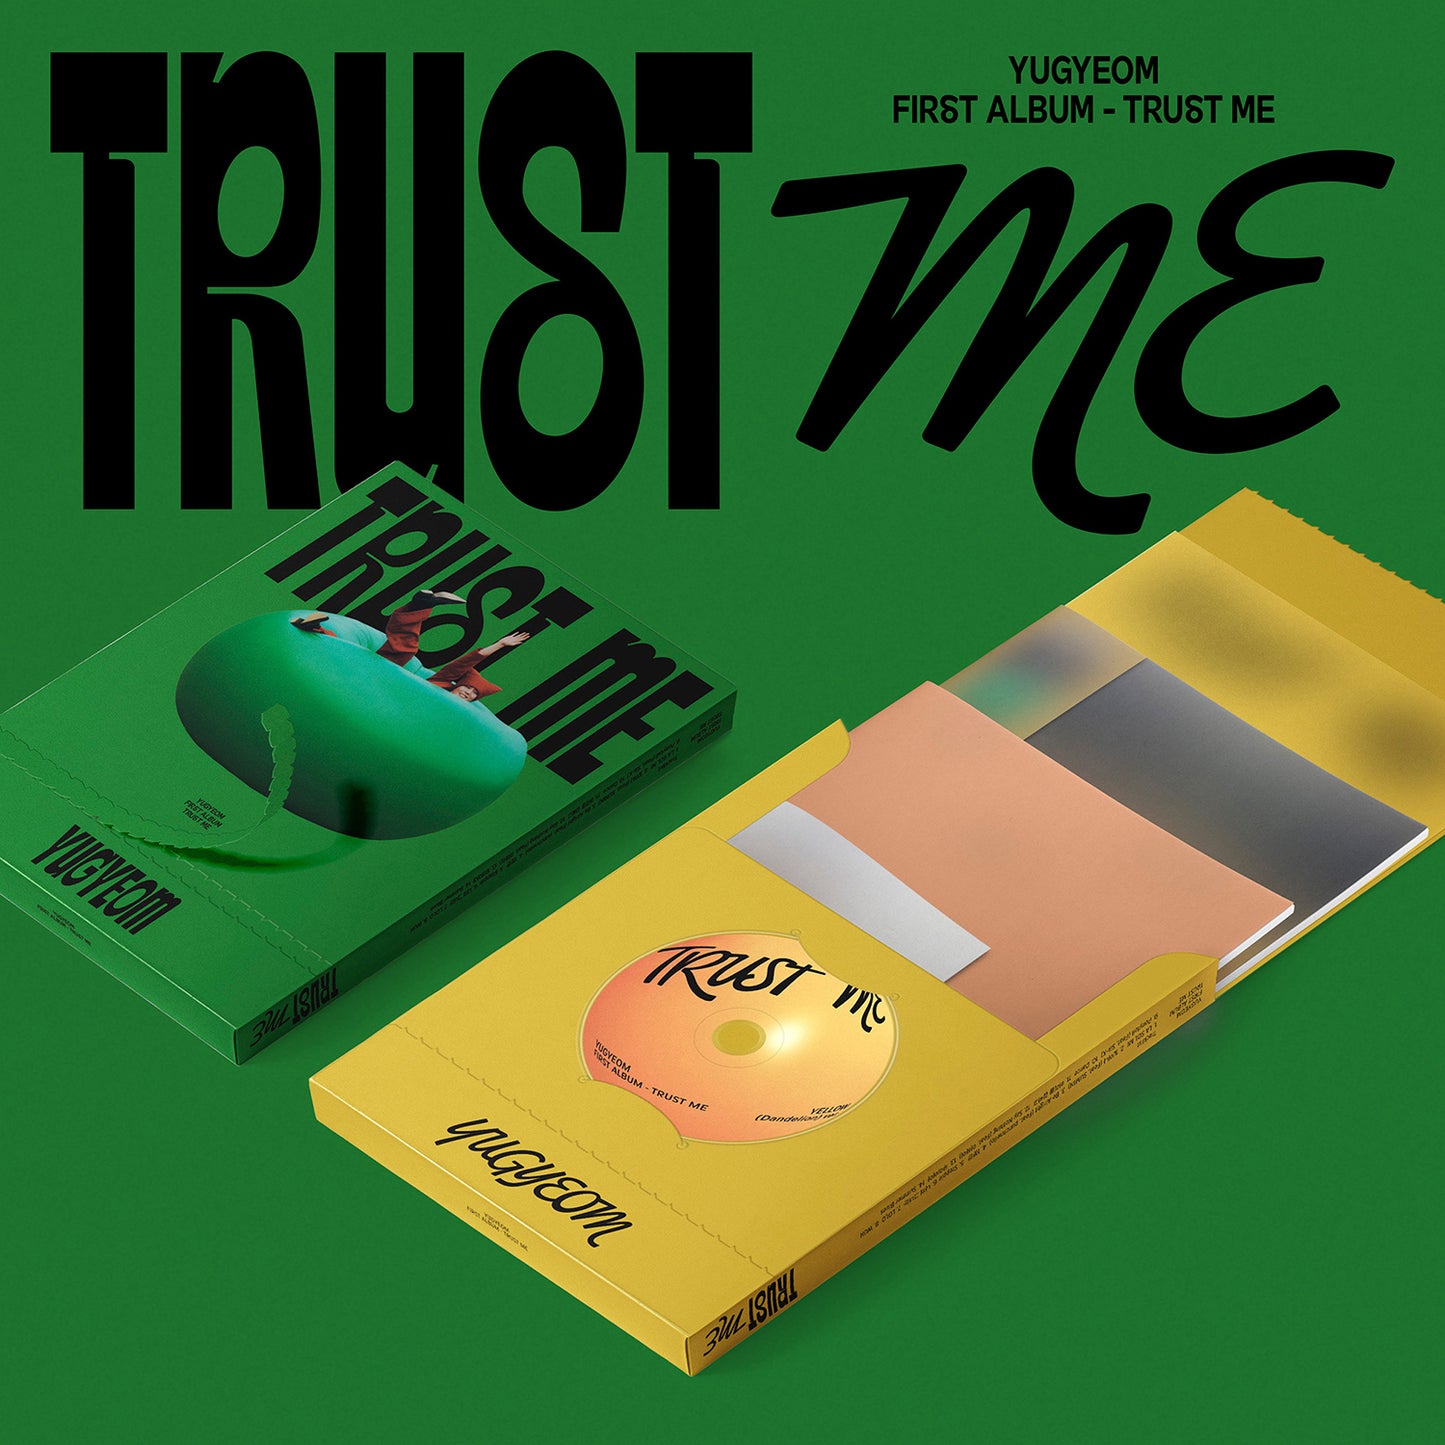 YUGYEOM FIRST ALBUM - TRUST ME